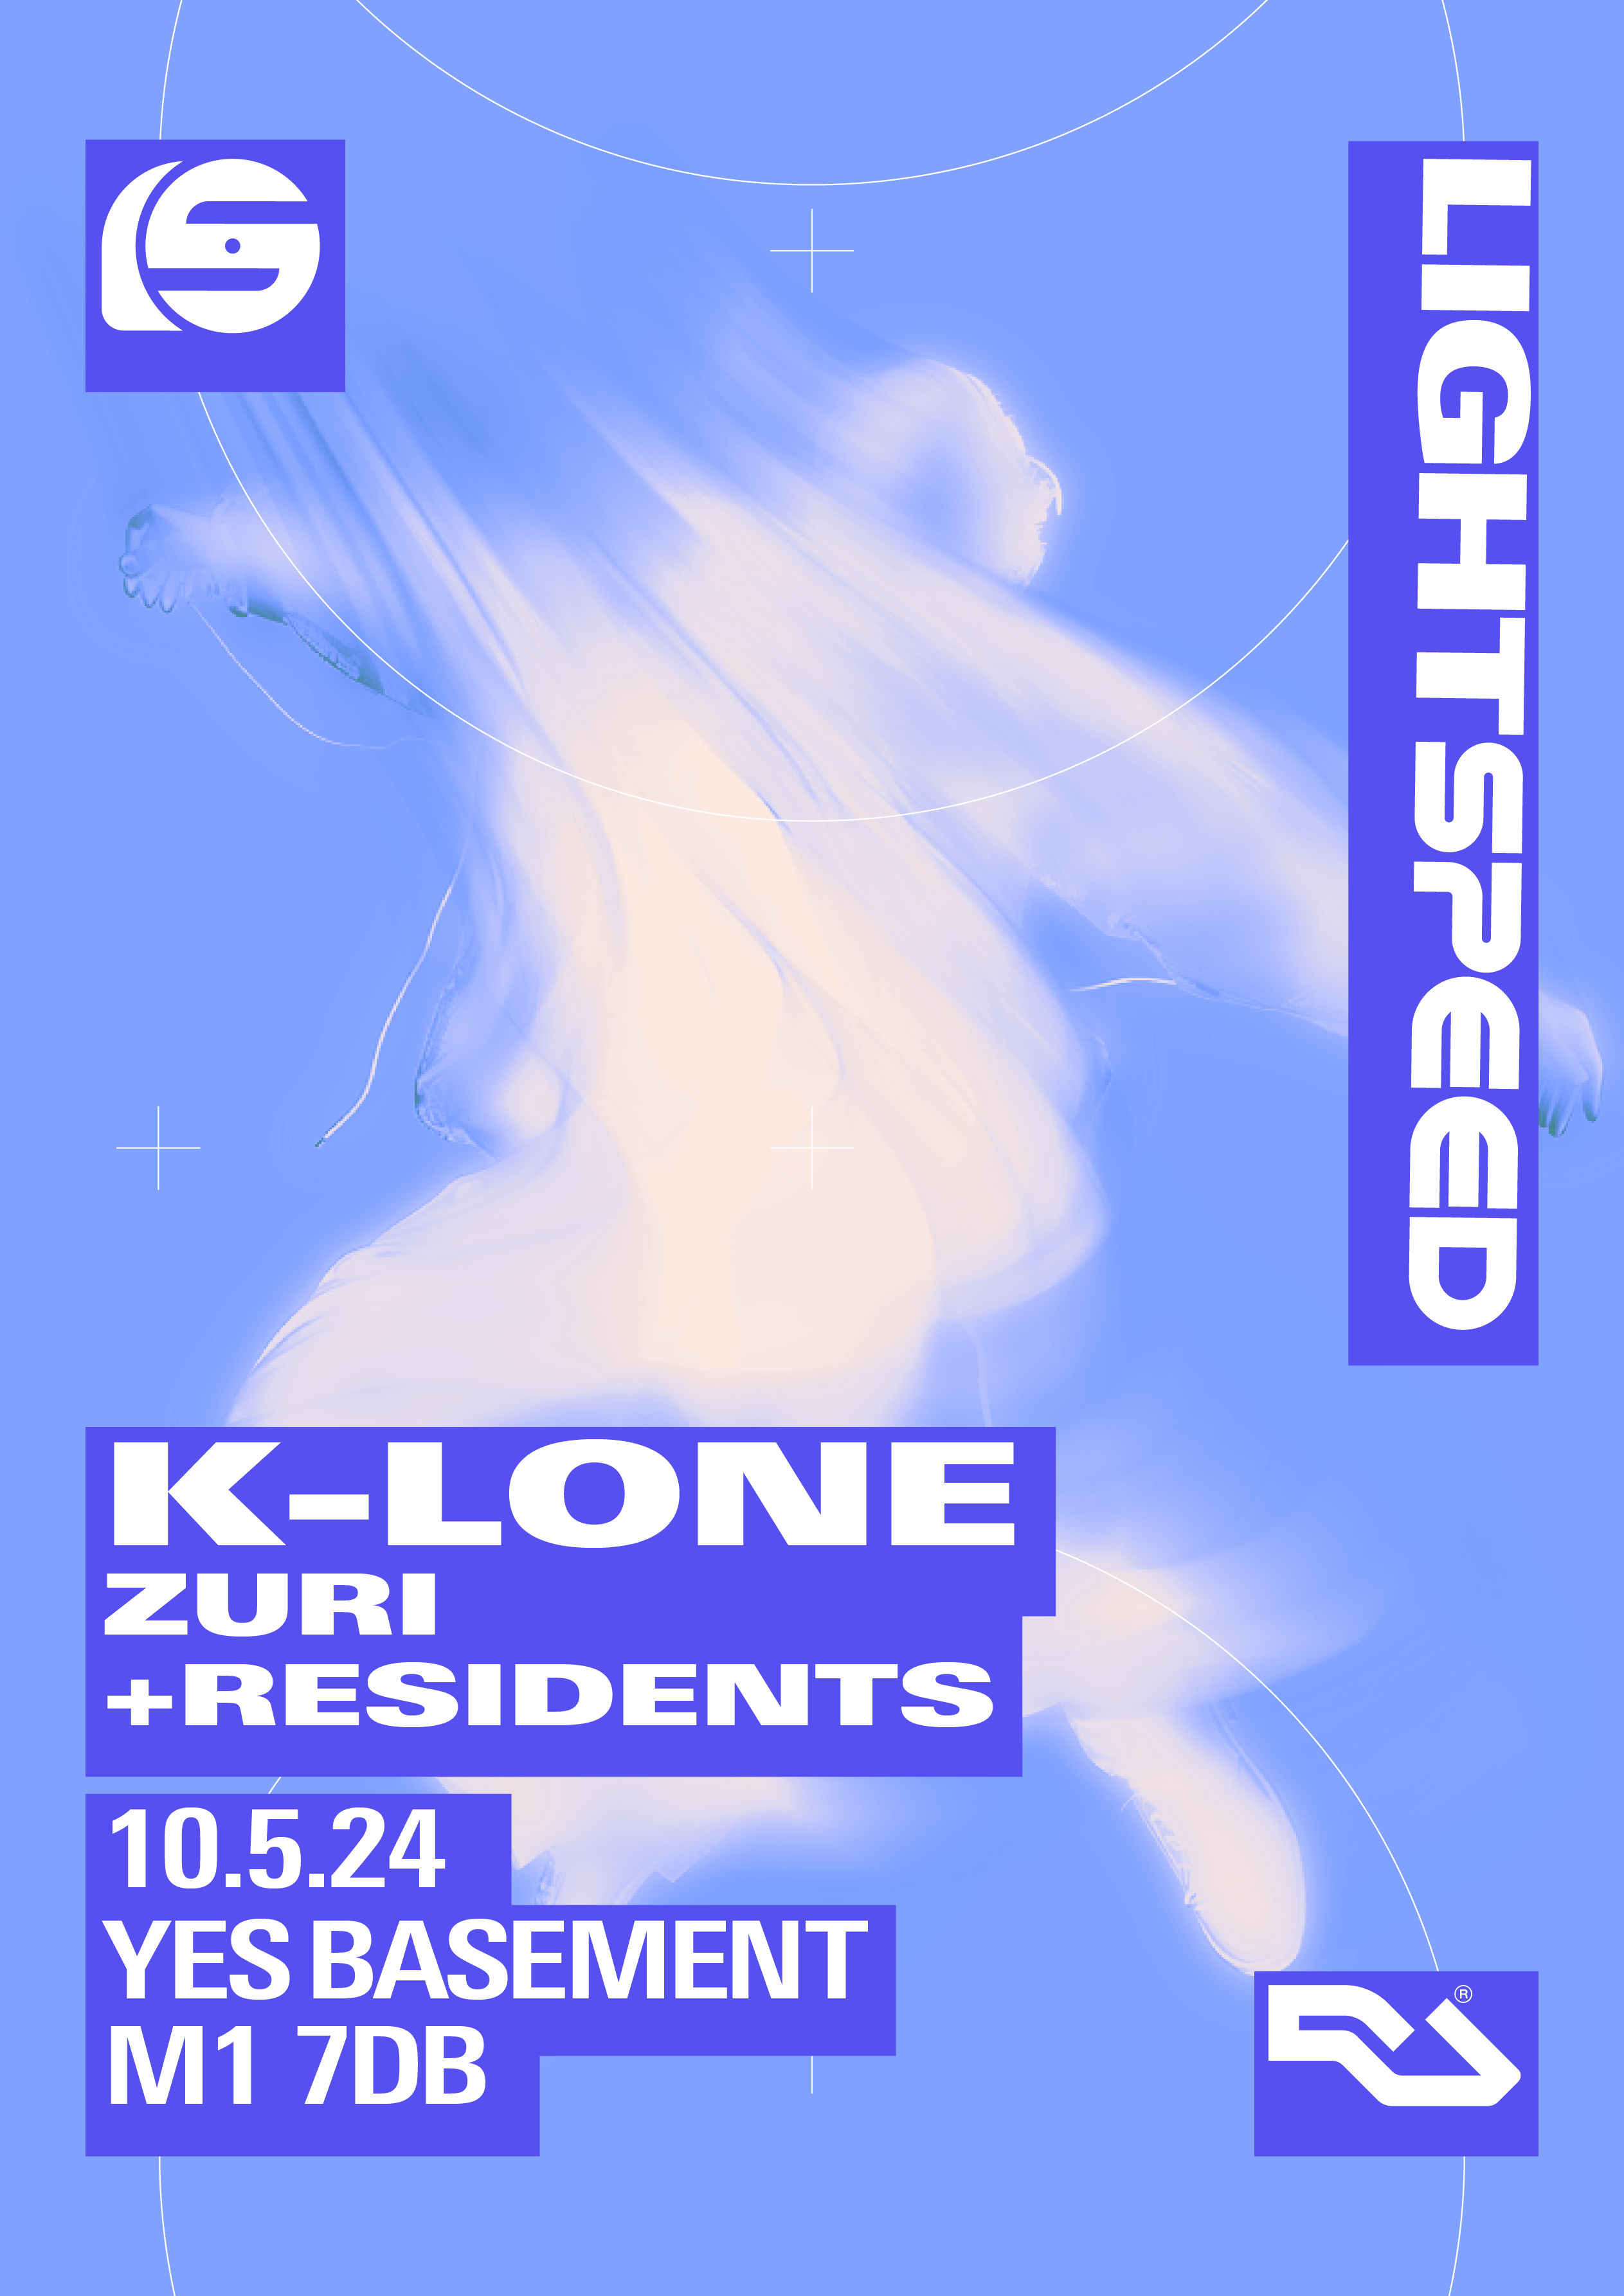 LIGHTSPEED presents K-LONE, Zuri and residents - フライヤー表